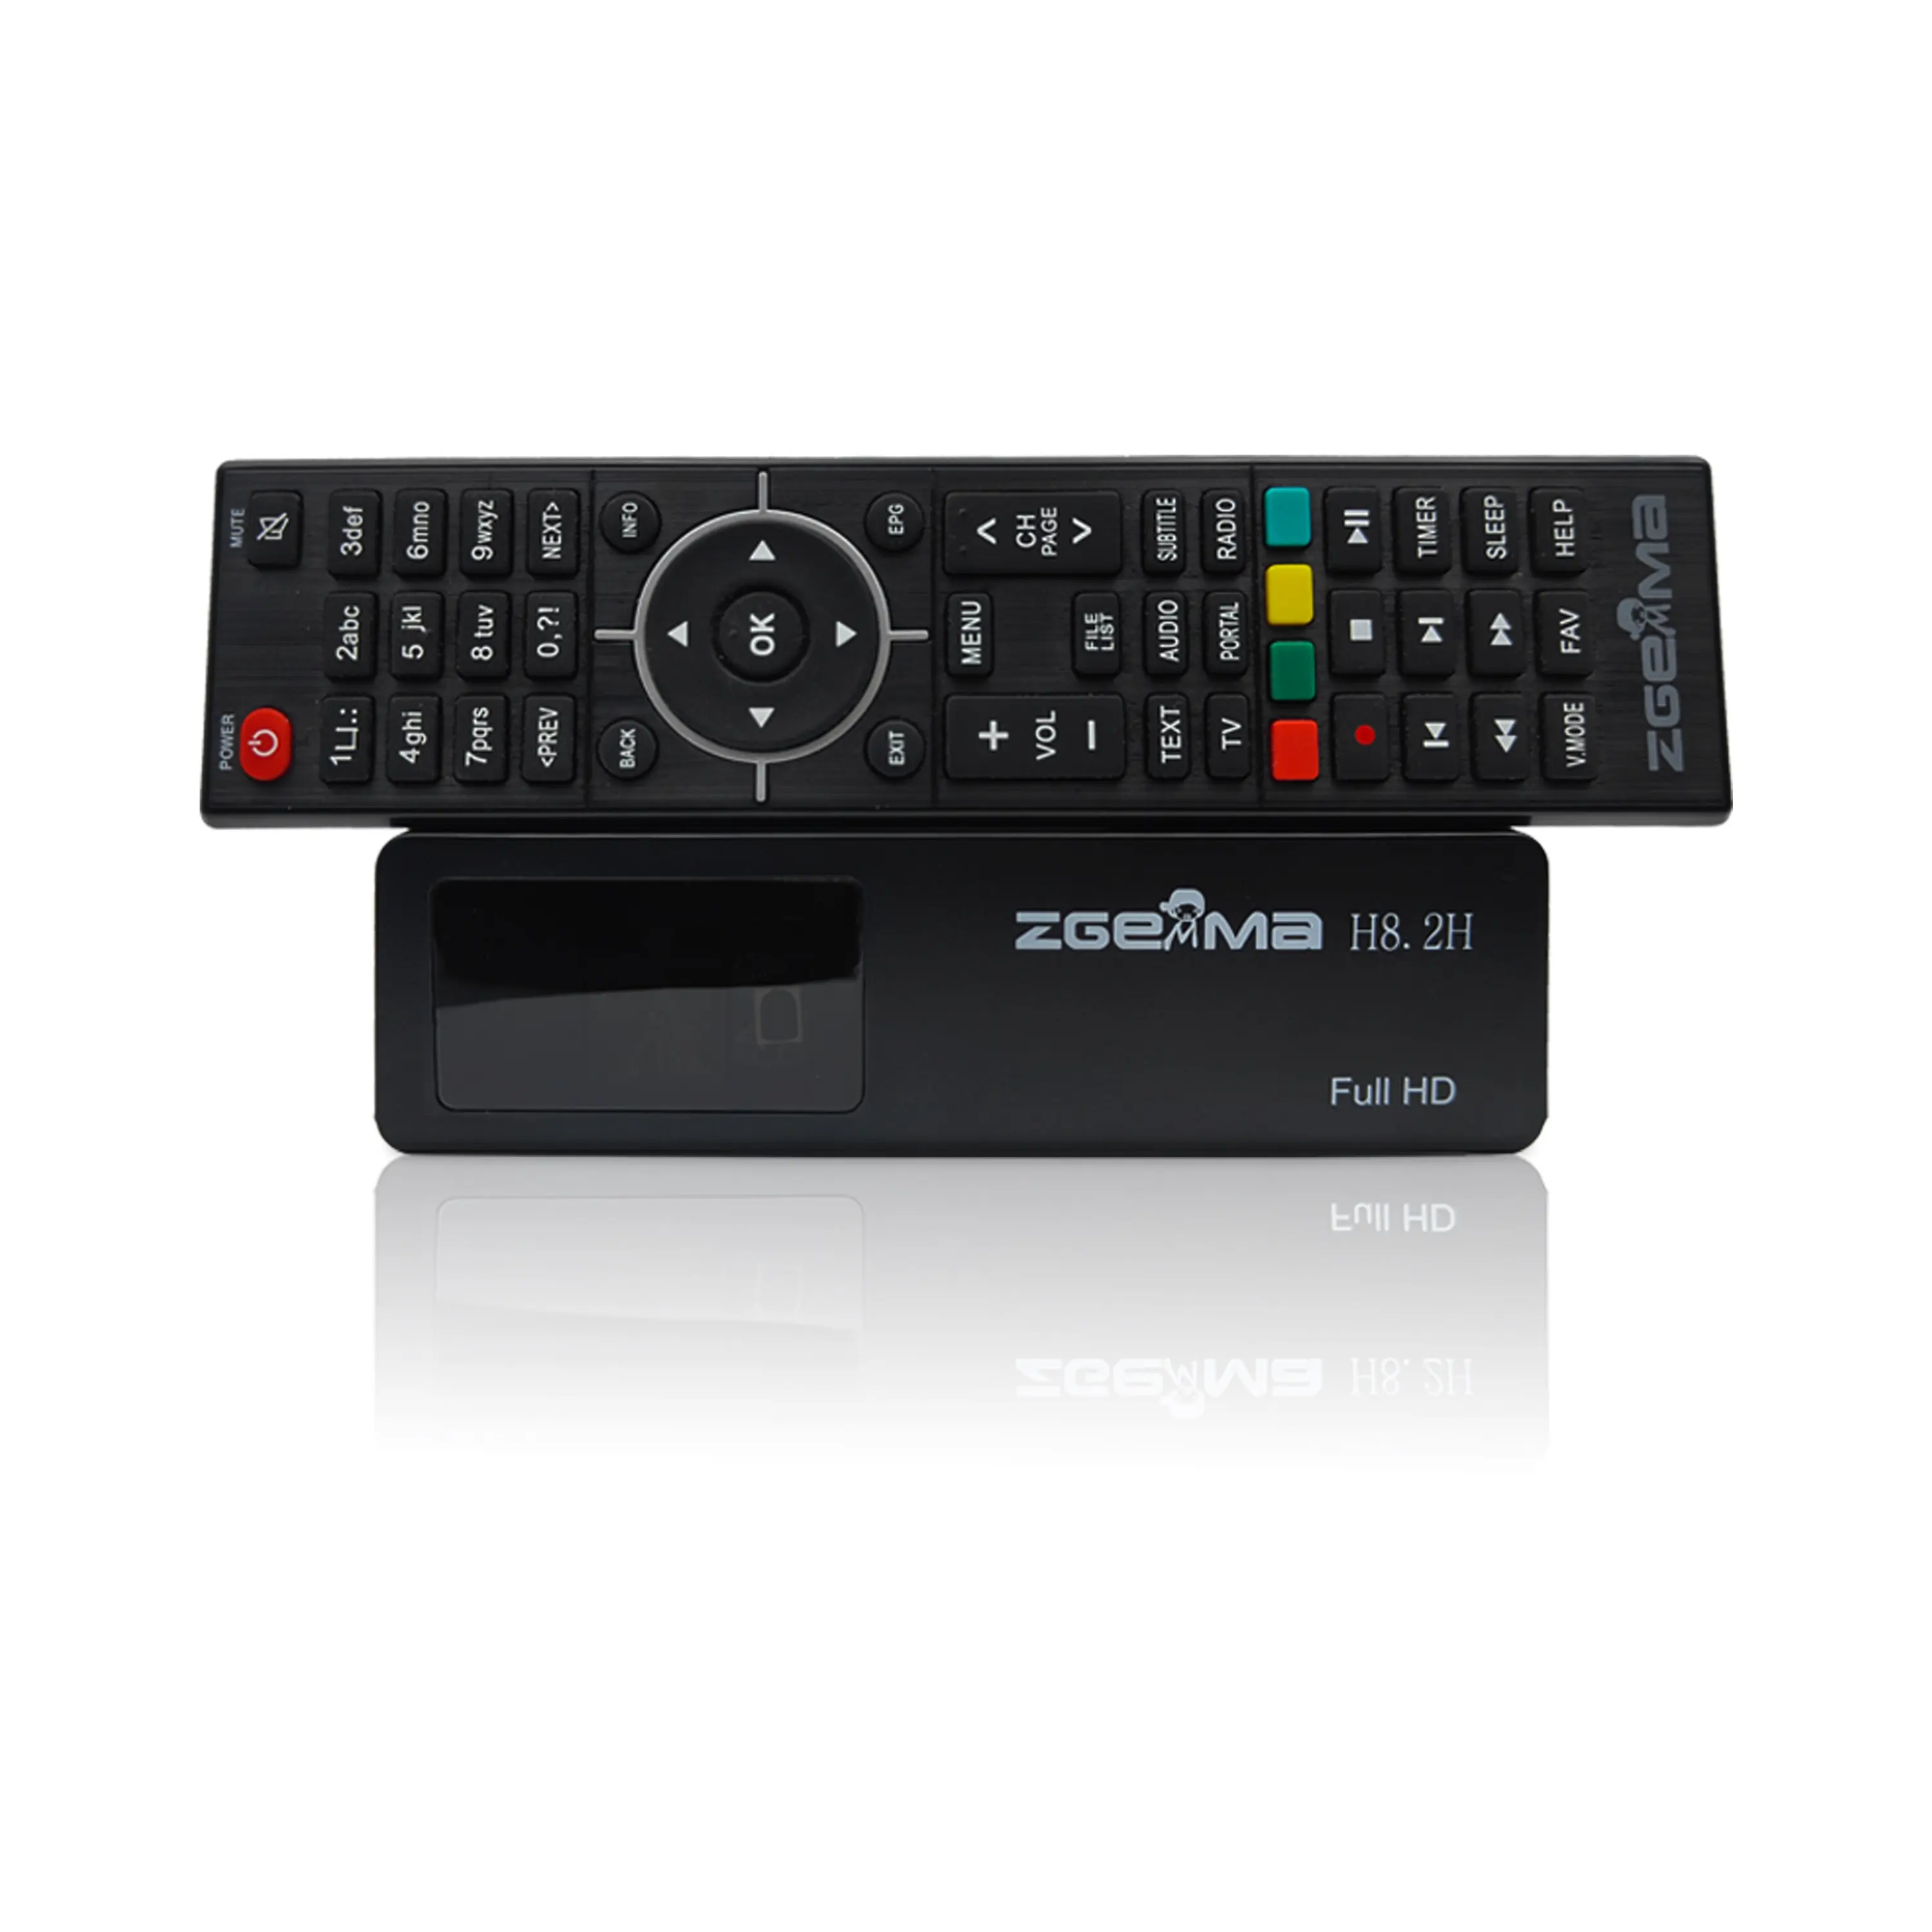 1080p H.265 Satellite tv receiver Enigm2 Linux OS DVB S2X + DVB T2/C combo tuner iptv box and tv decoder ZGEMMA H8.2H